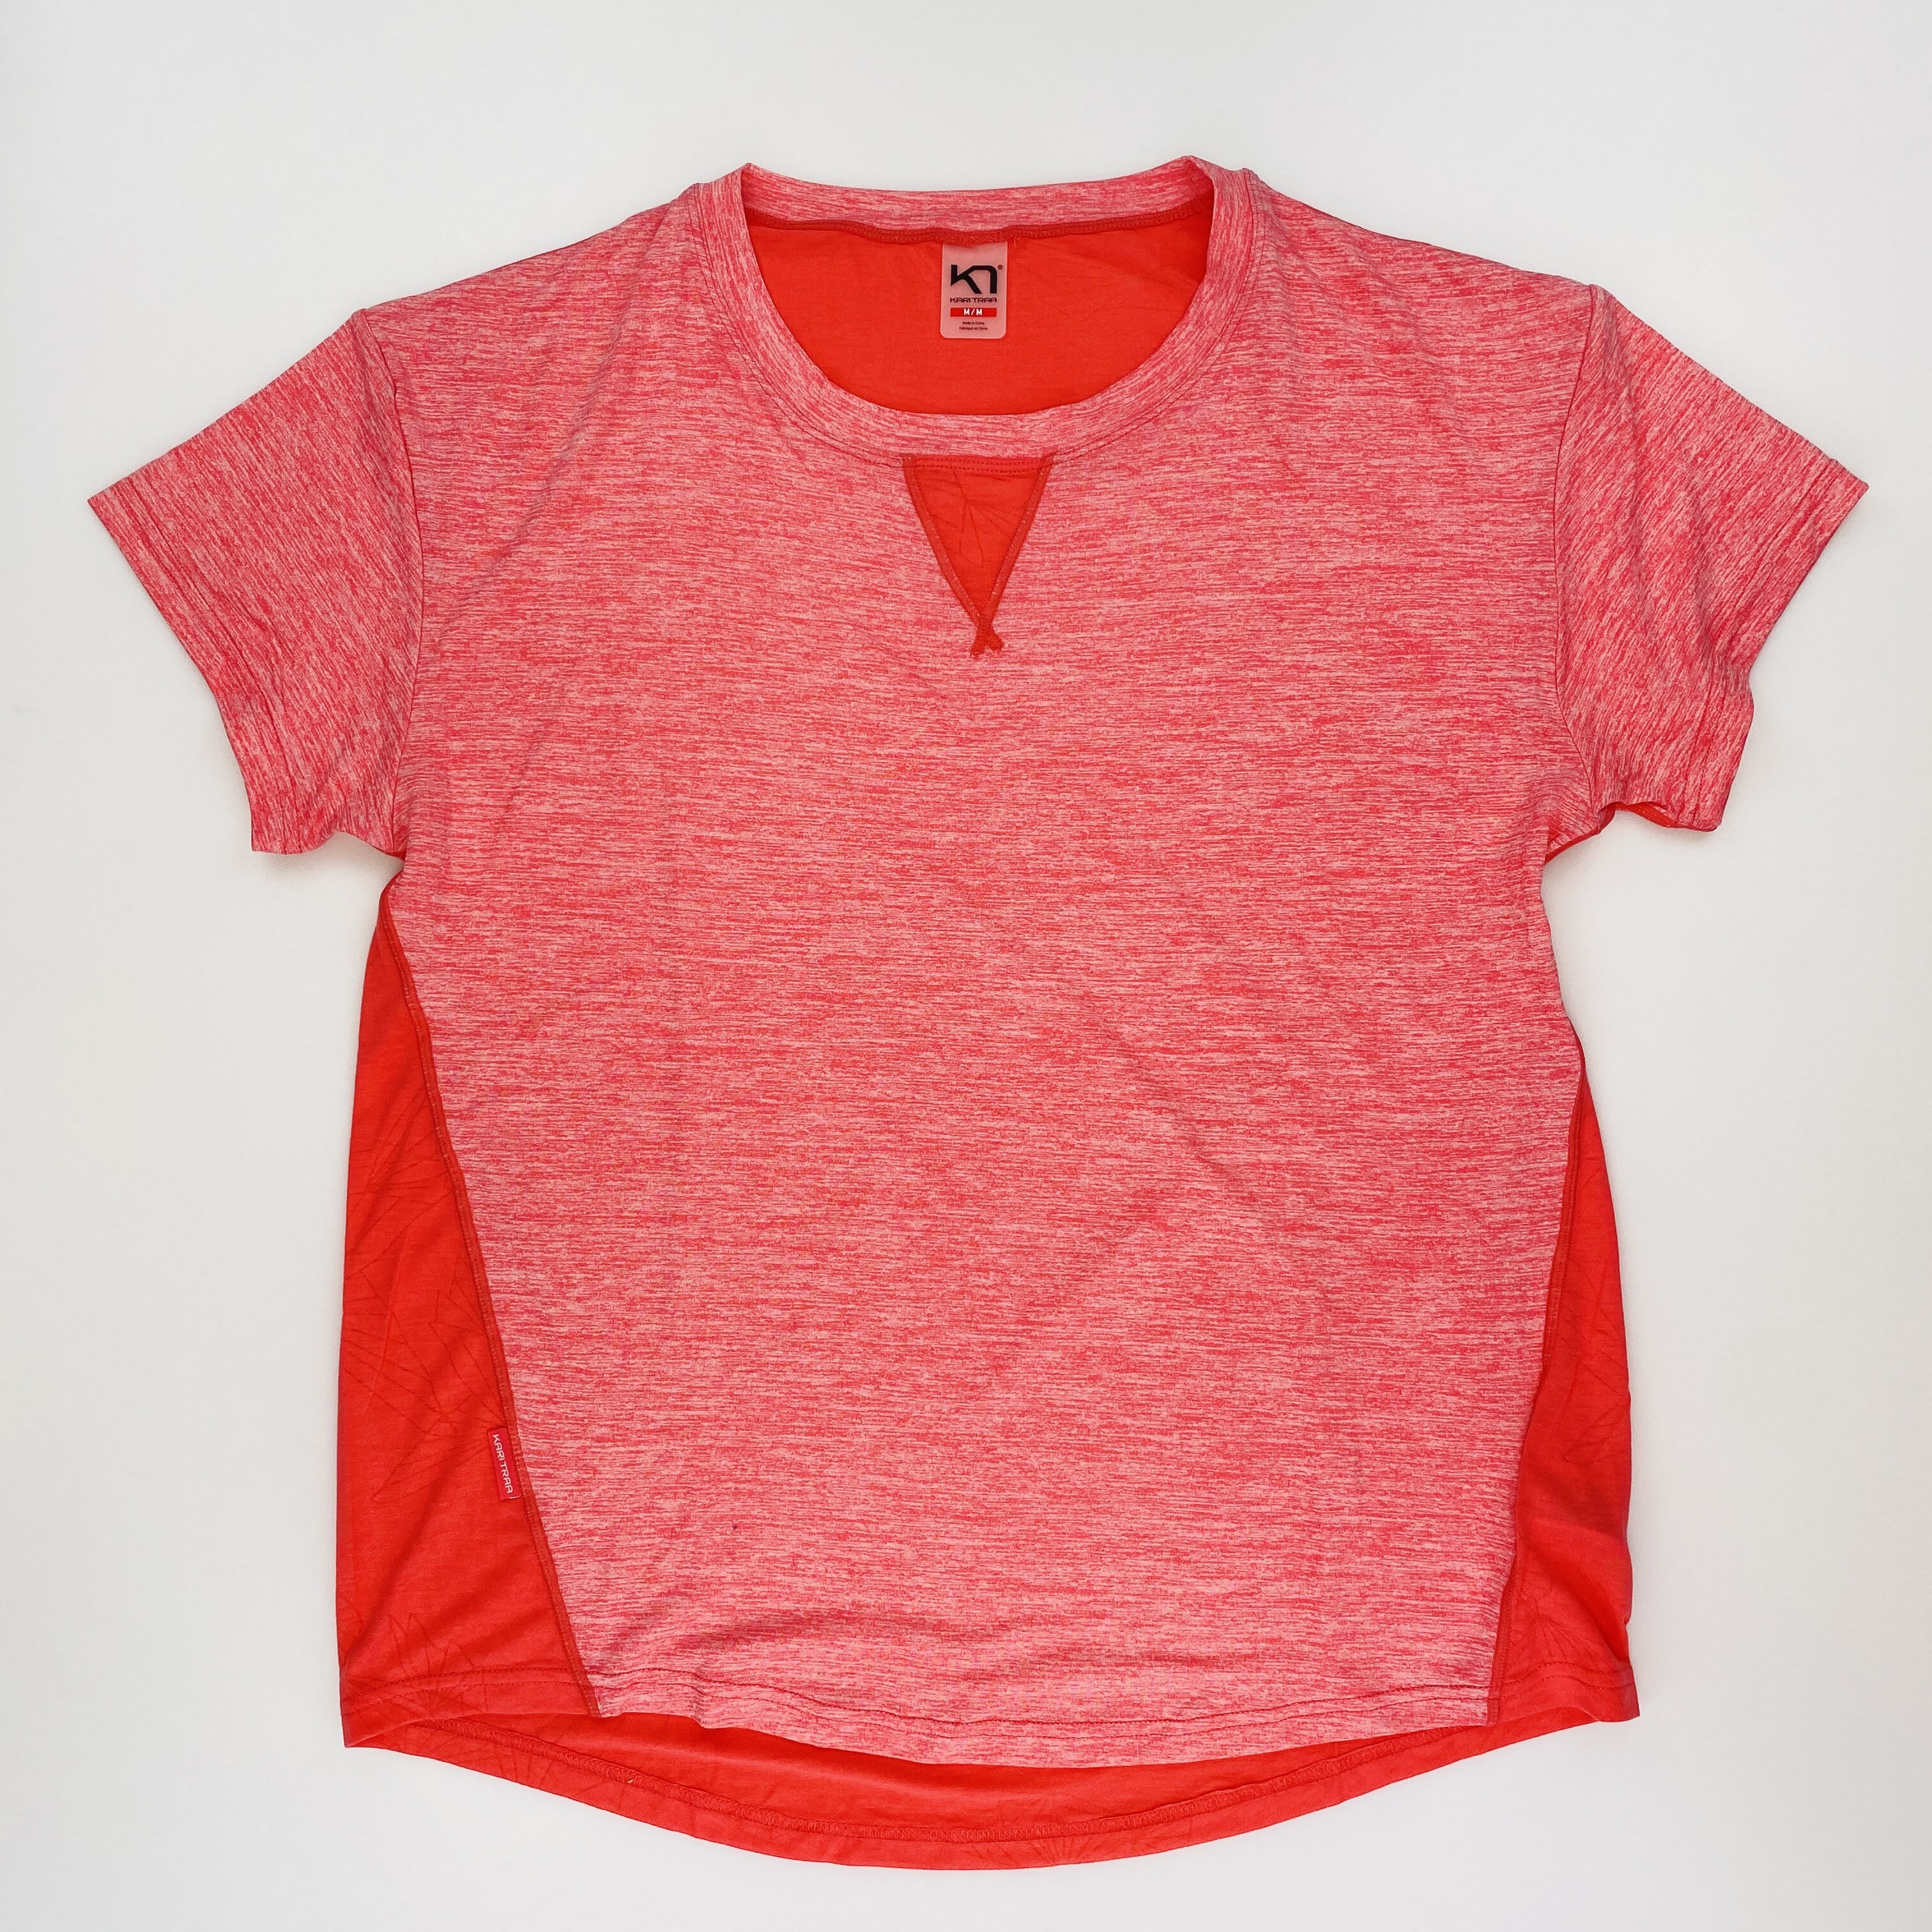 Kari Traa Kine Tee - Second Hand T-shirt - Women's - Pink - M | Hardloop